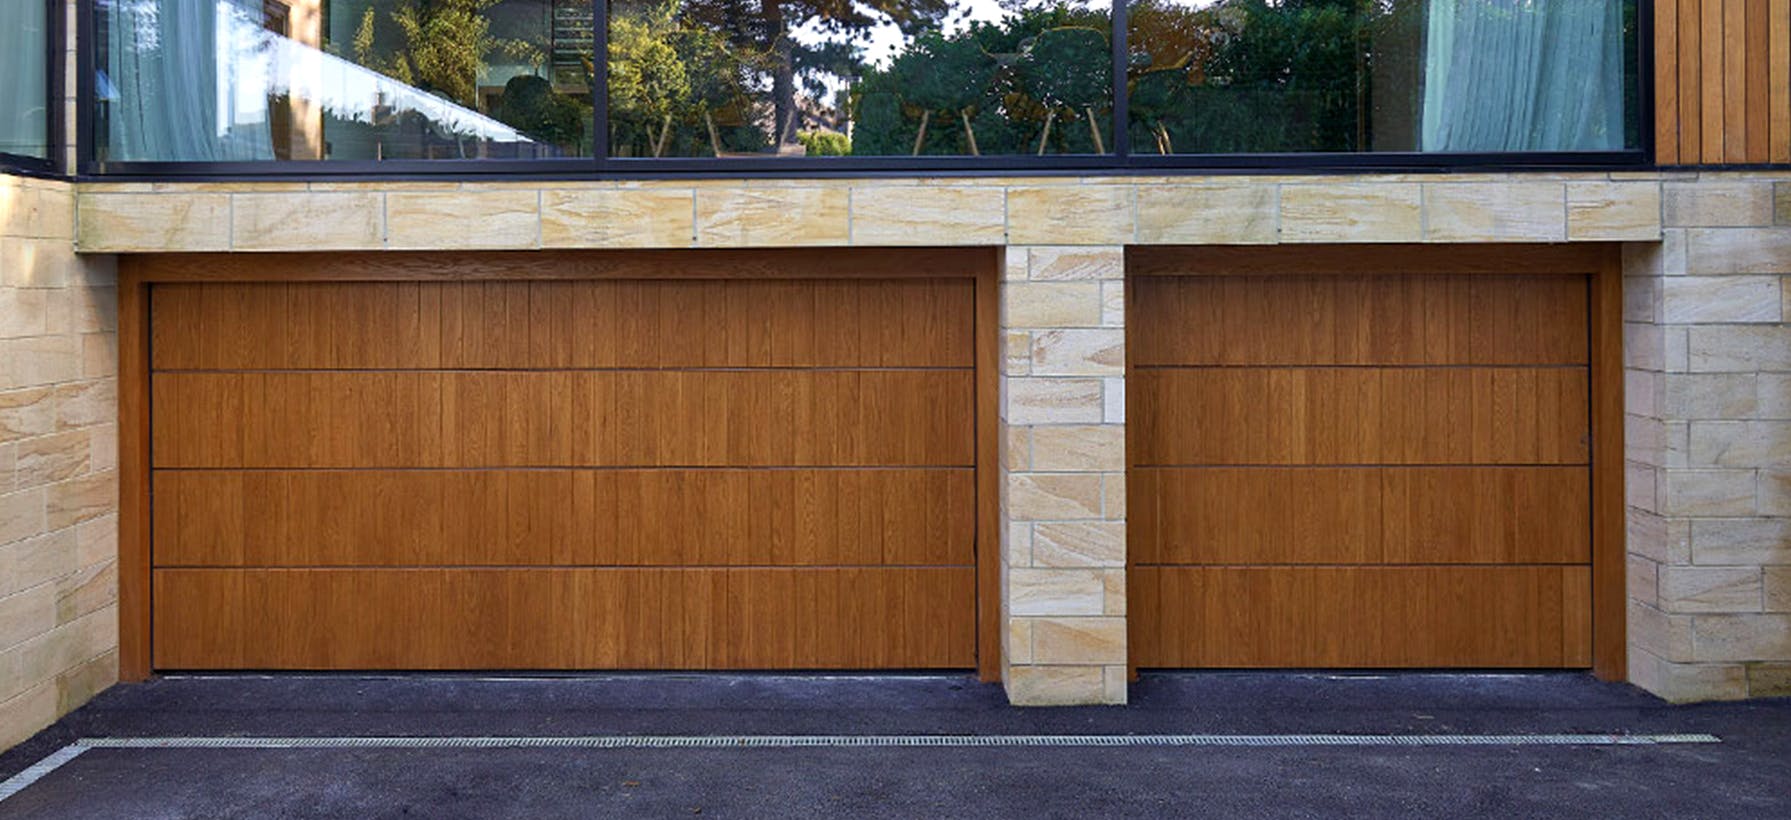 Wooden textured garage with with Tavole style